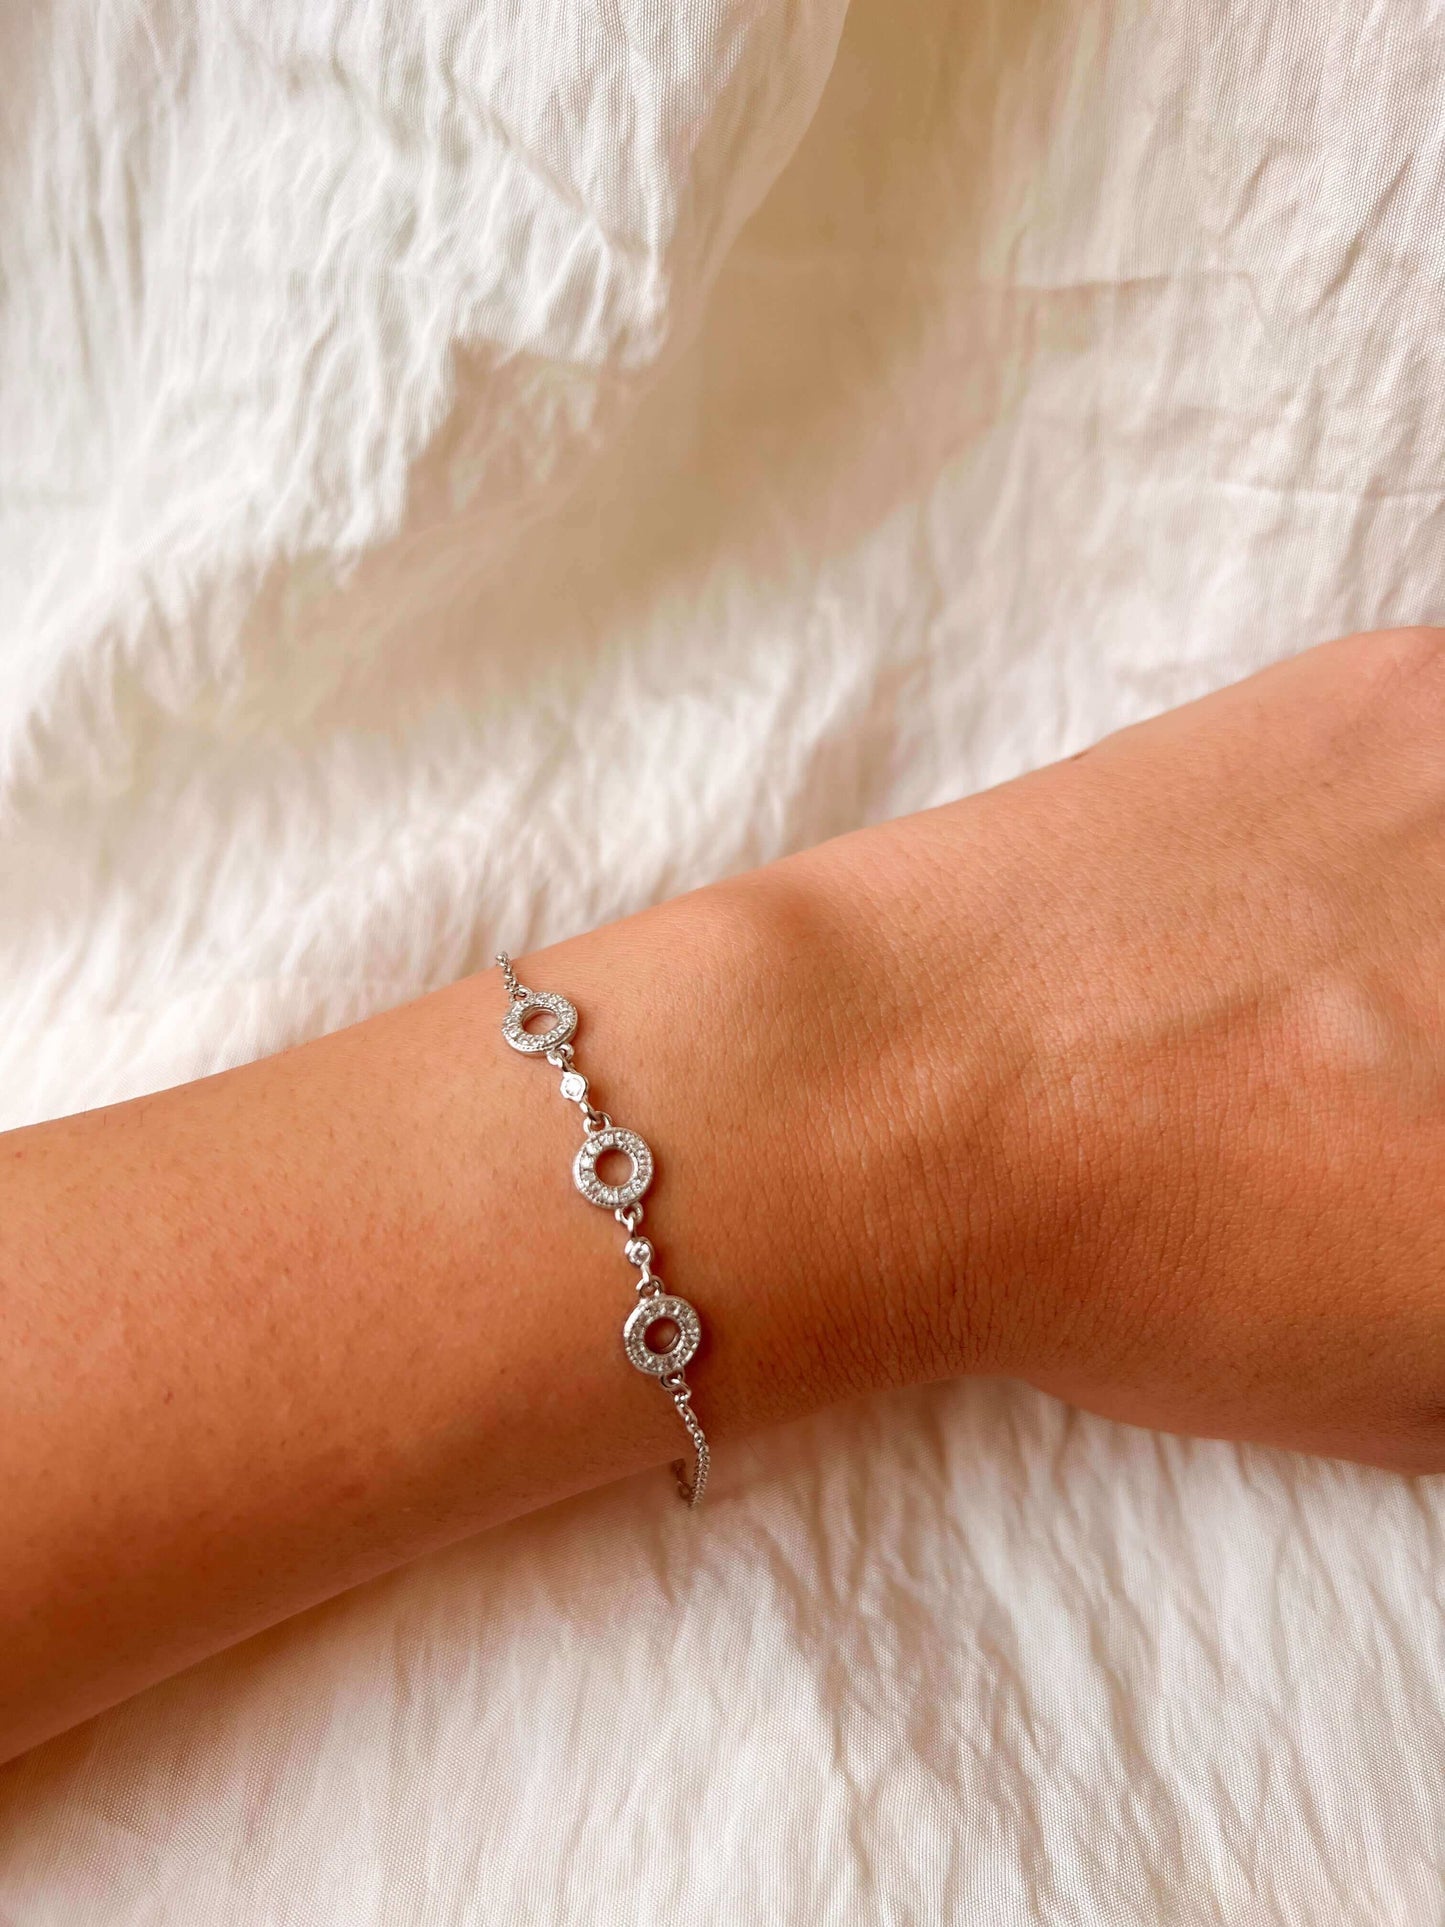 Trifecta silver bracelet with zirconia